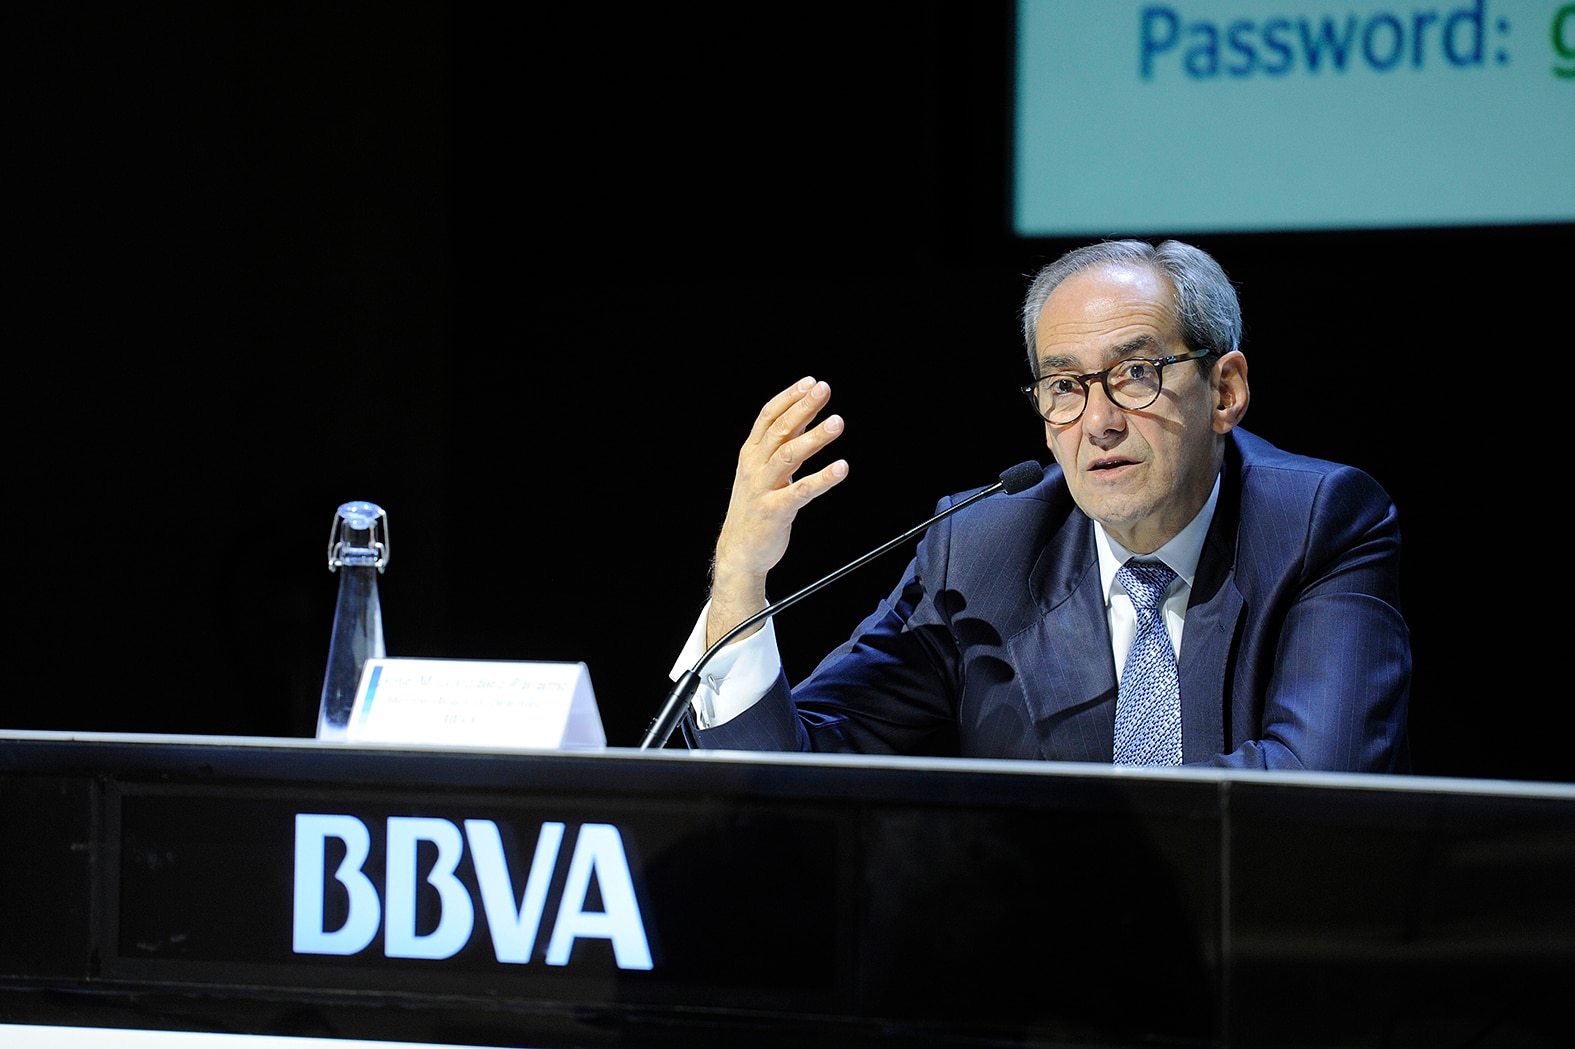 José Manuel González-Páramo: “Ethics are the keystone of the banking sector”